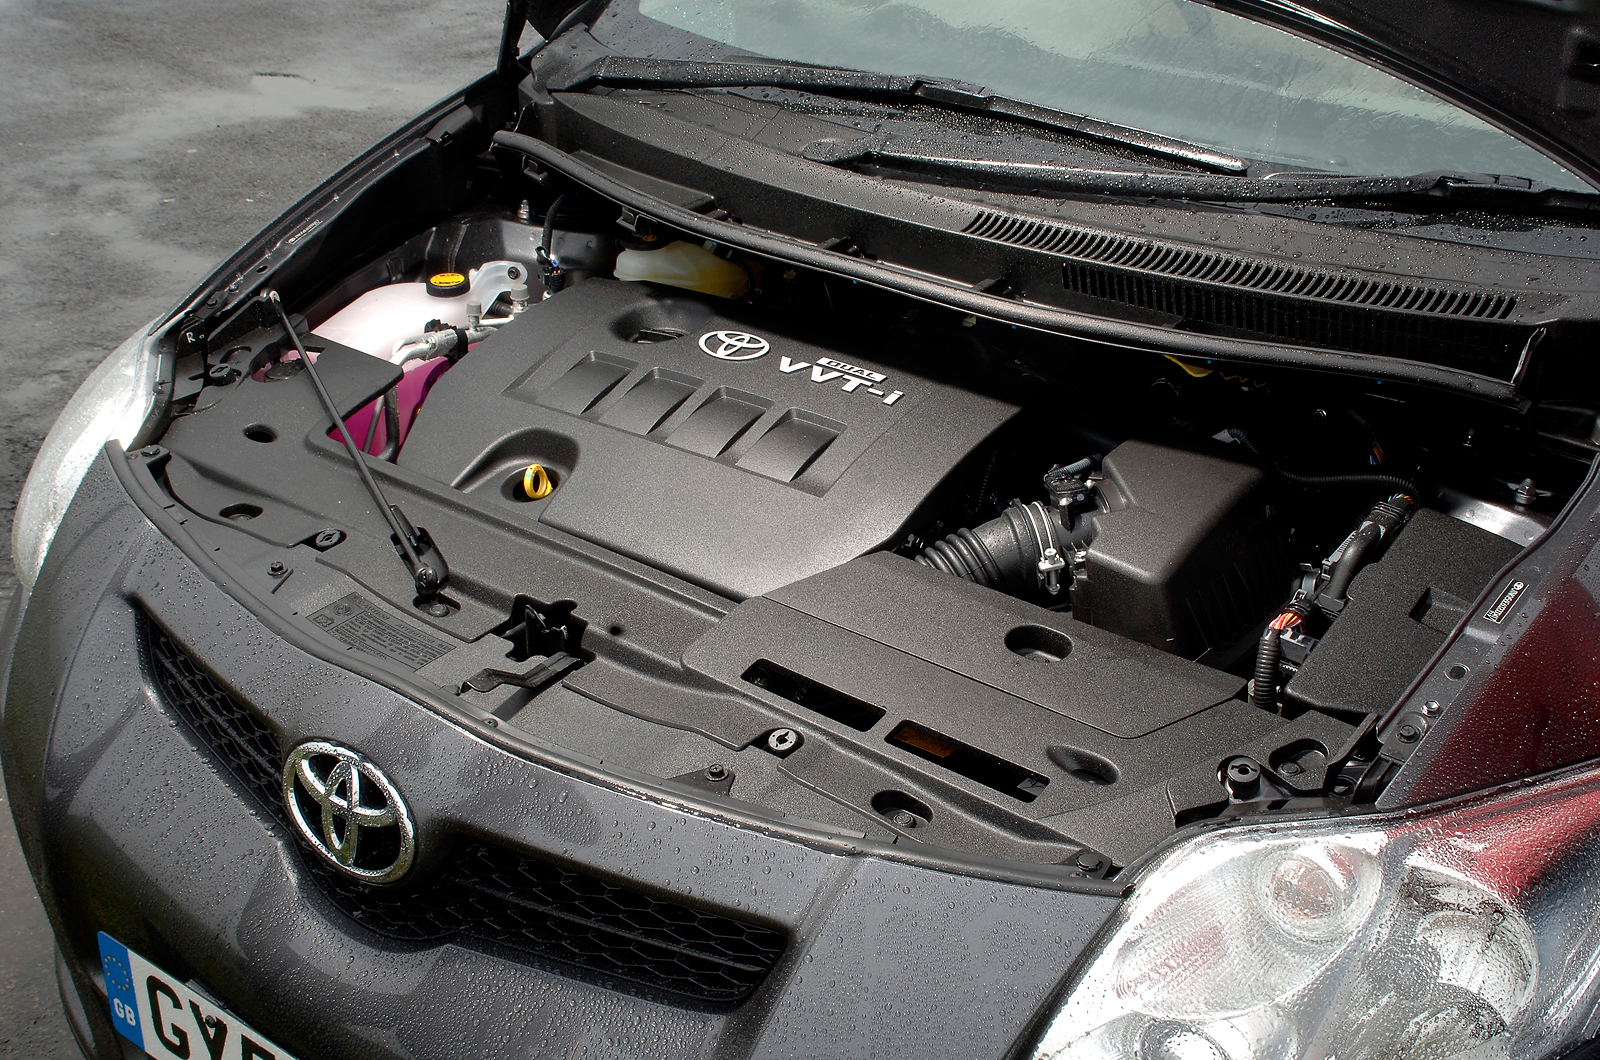 Toyota Auris engine bay